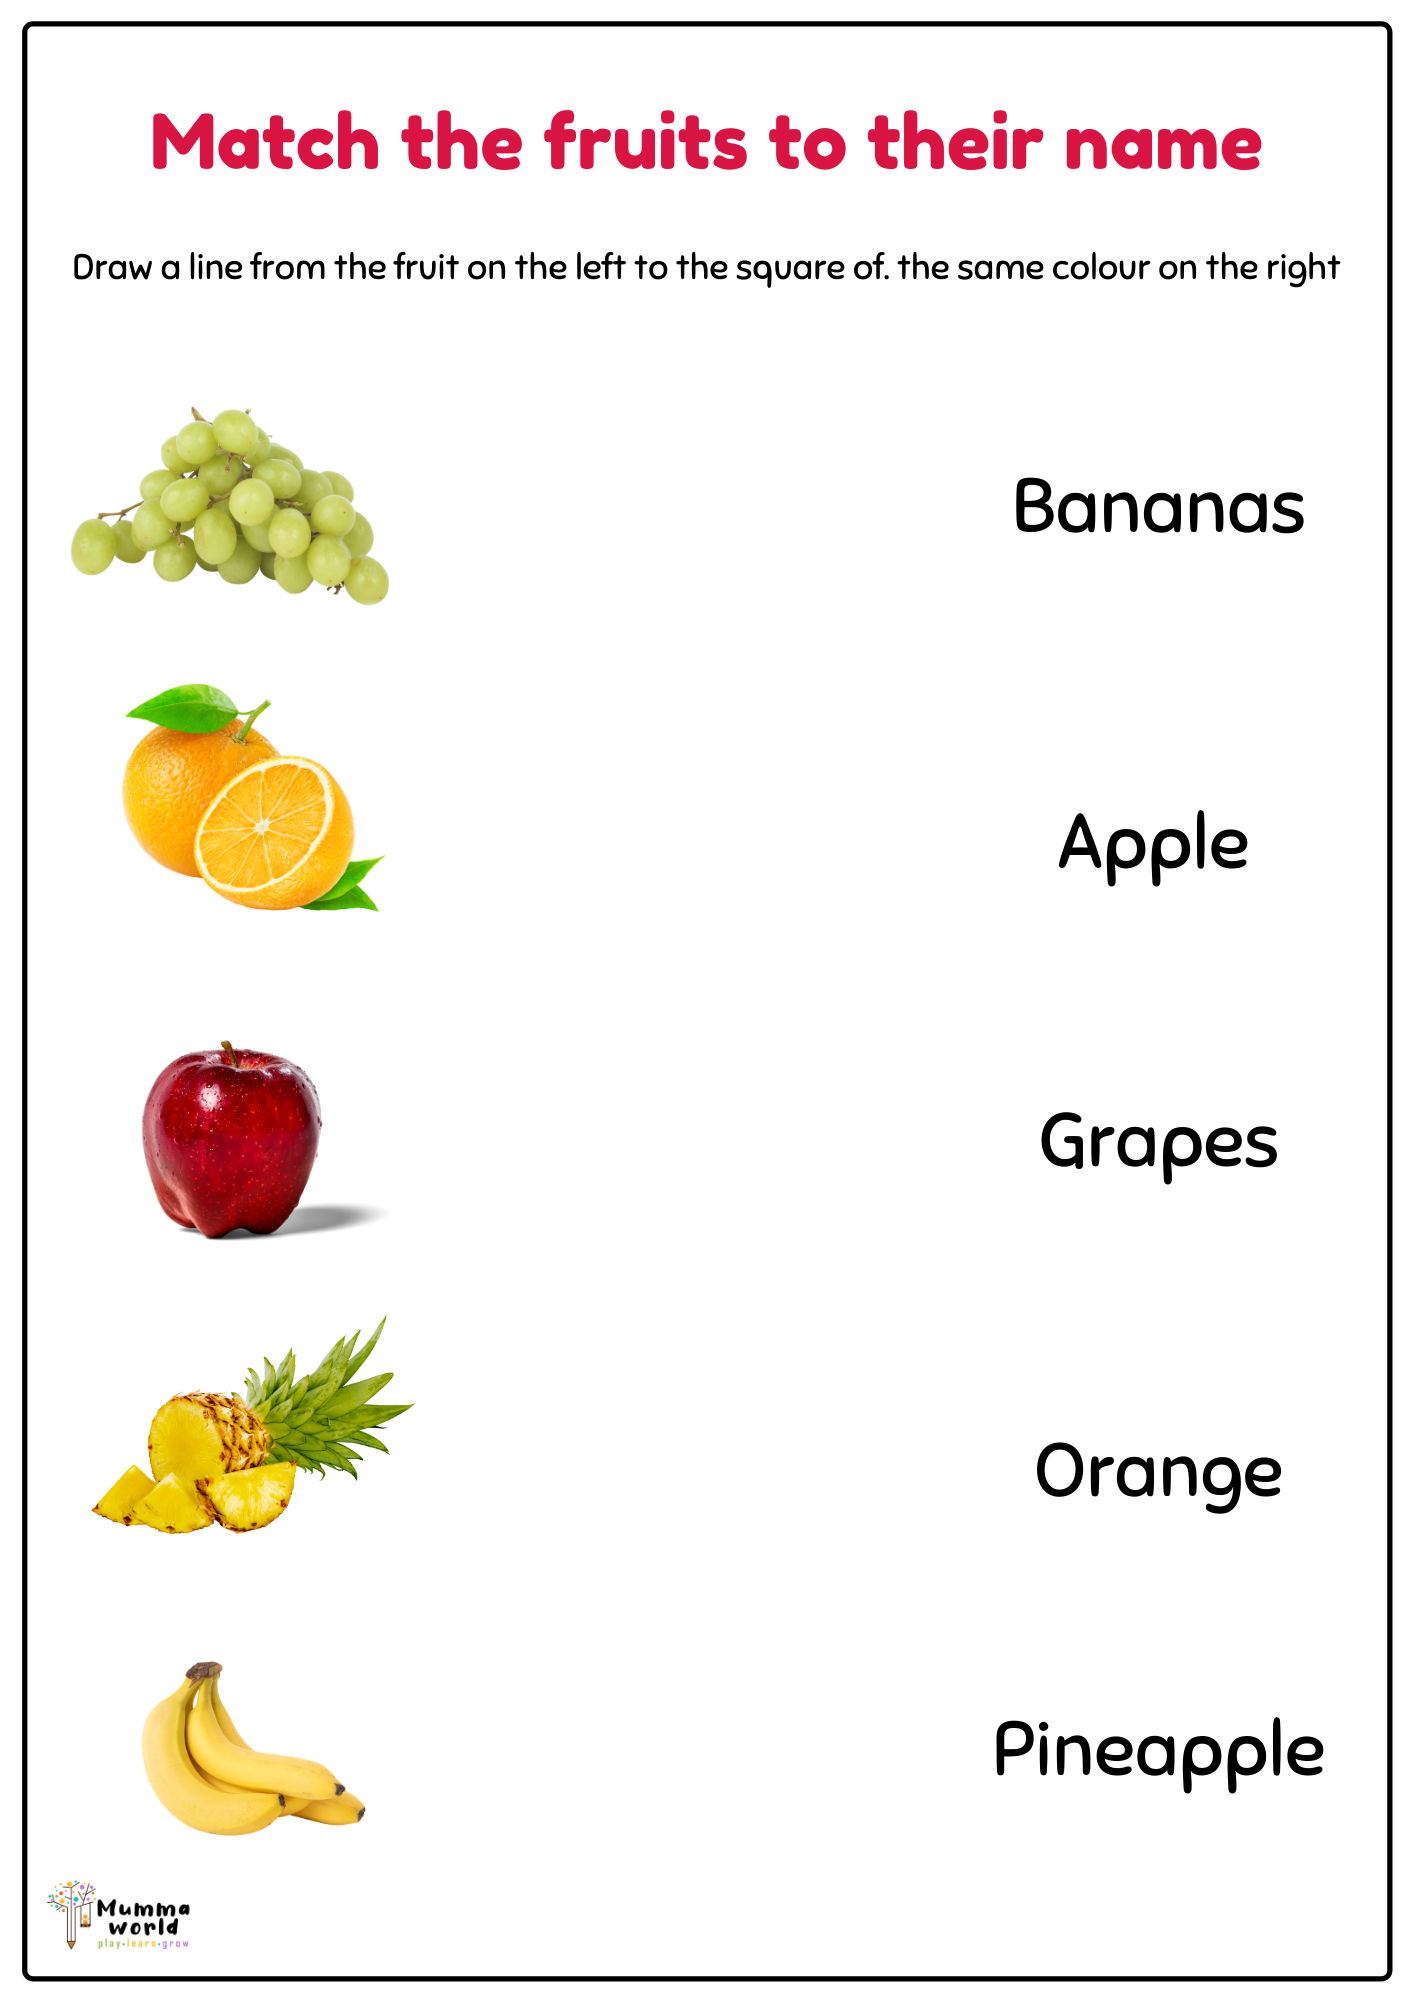 match-the-fruits-to-their-name-fruits-worksheet-mummaworld